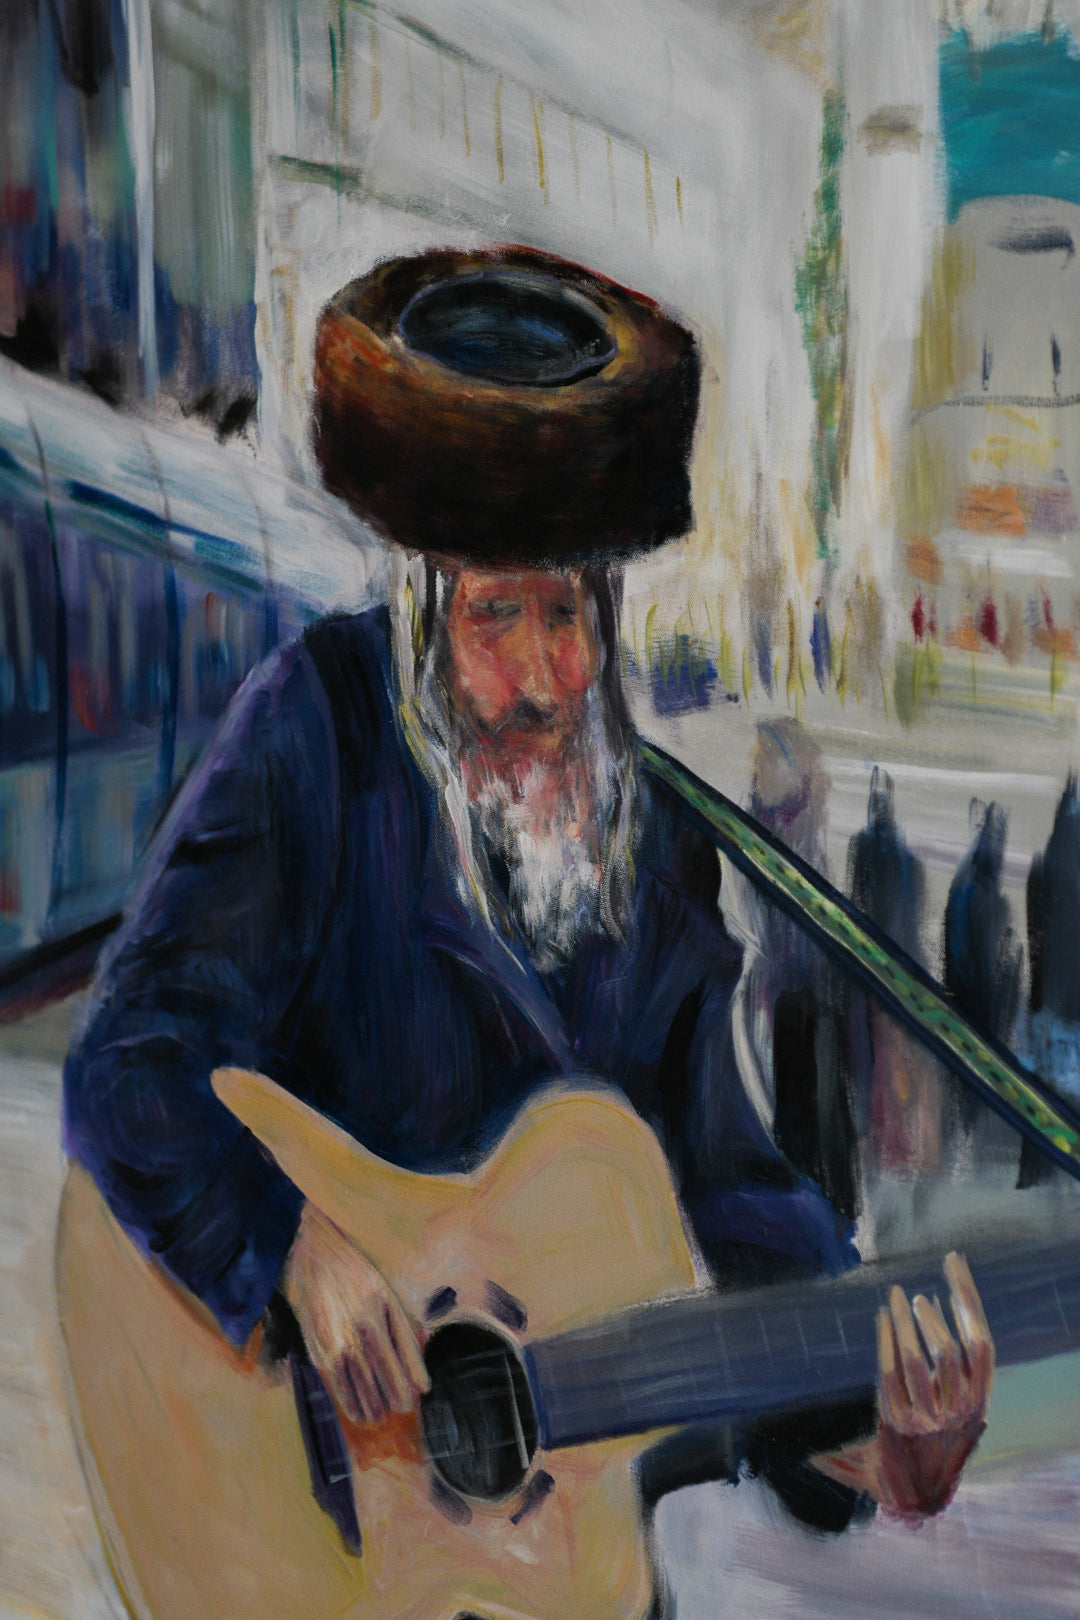 Musician in the street of Jerusalem